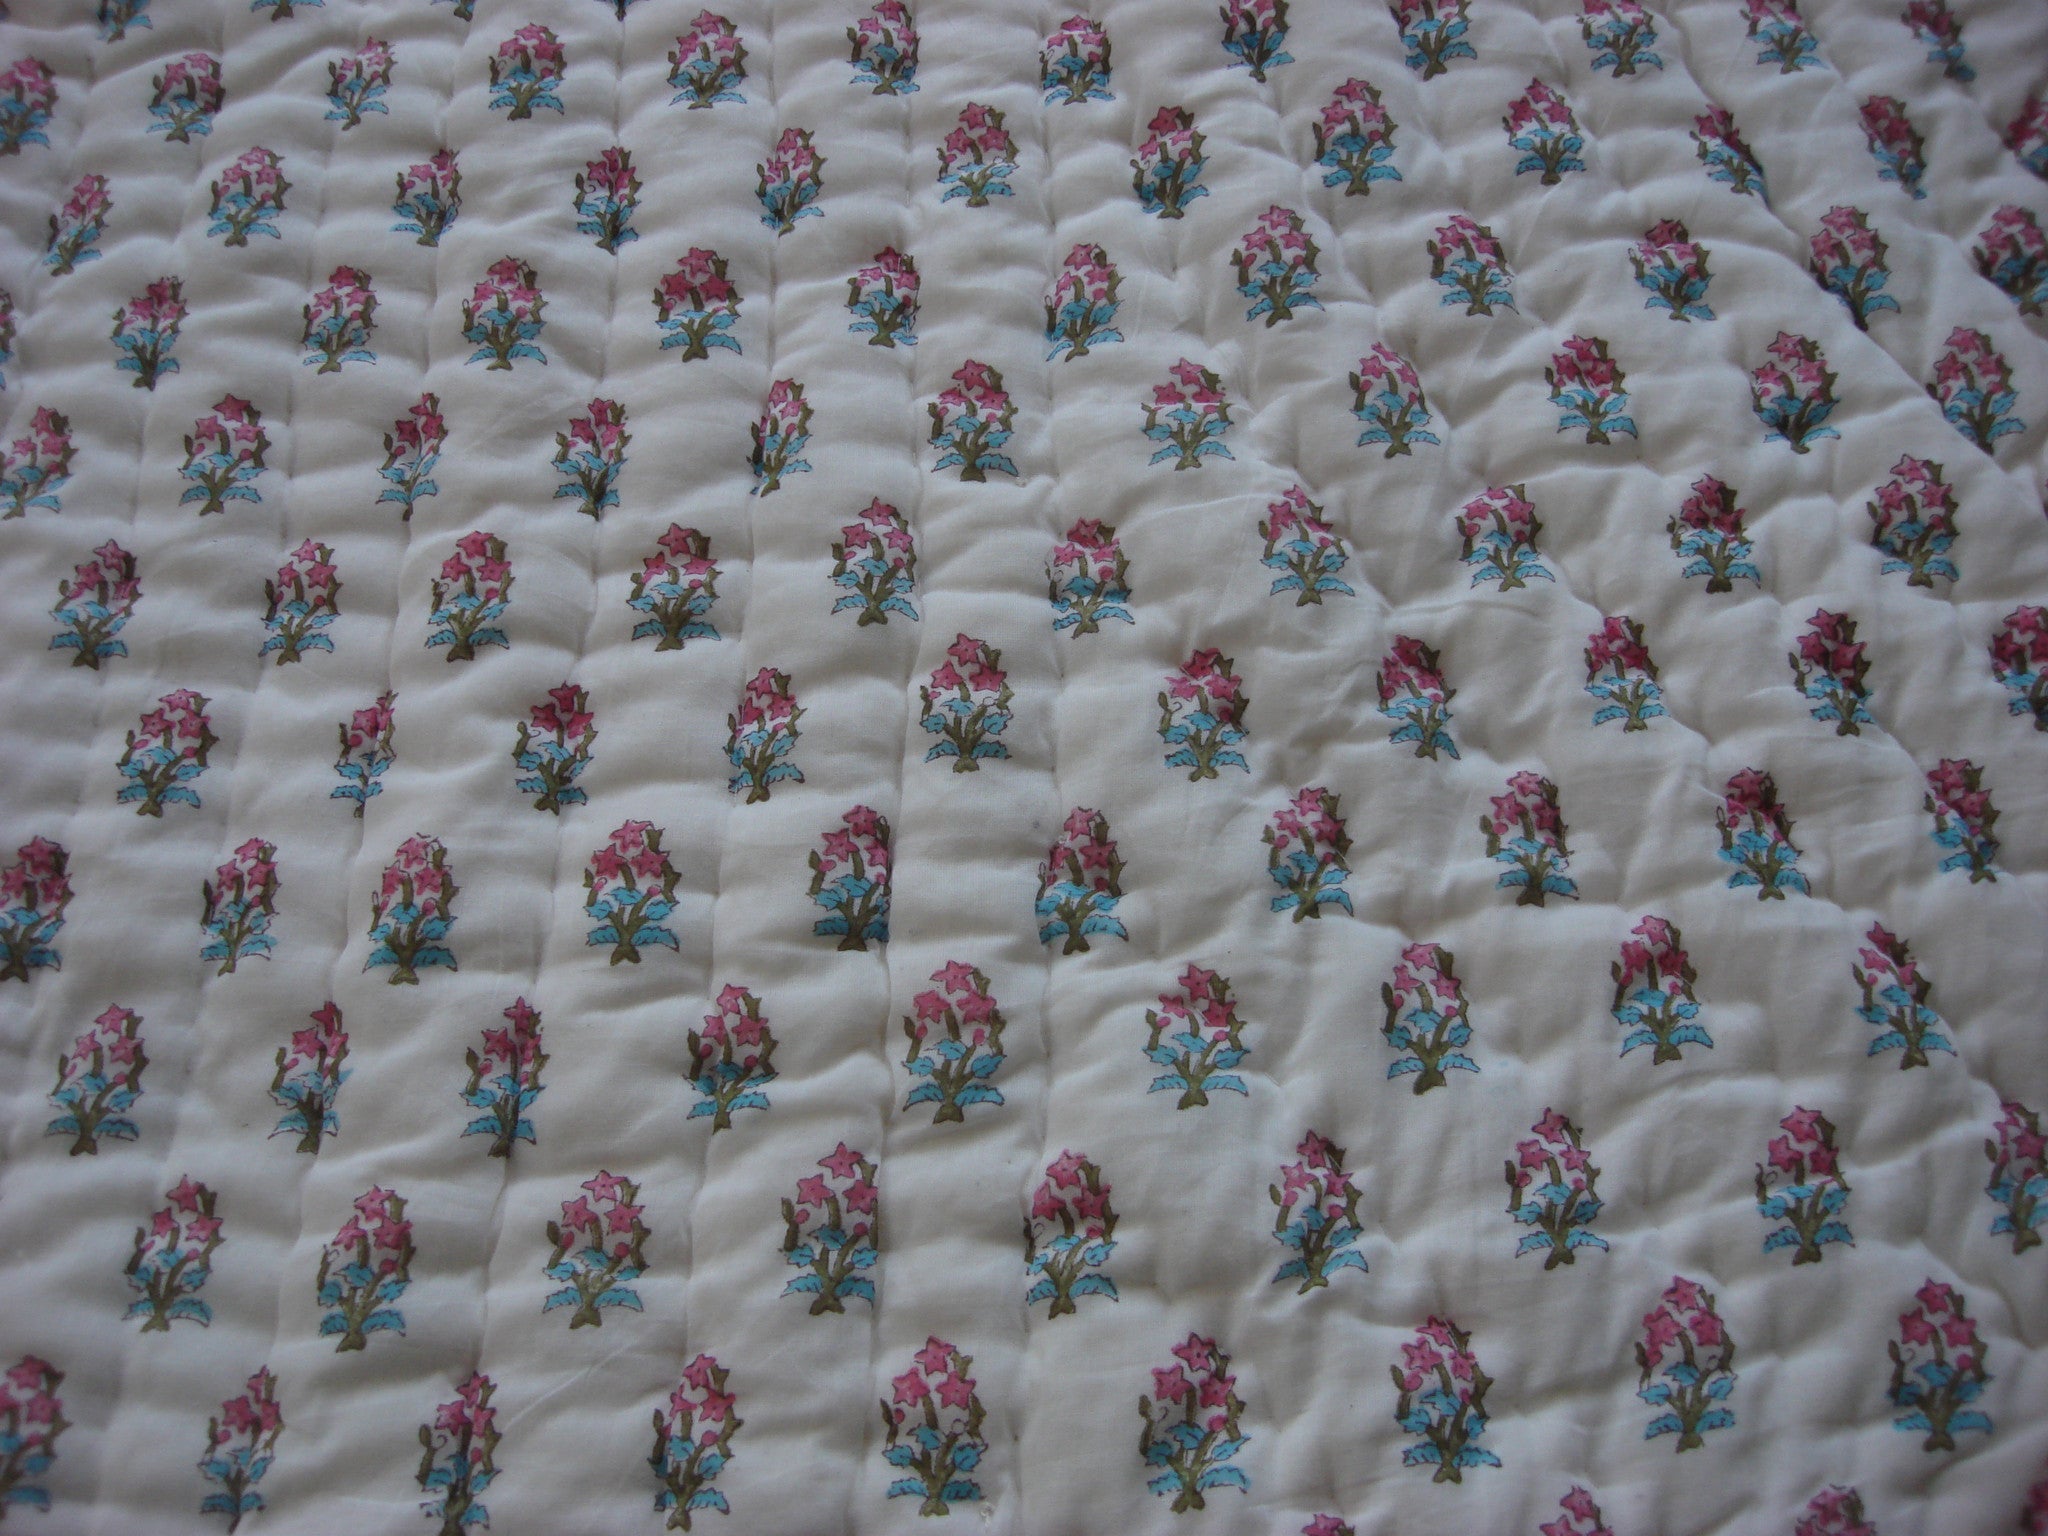 QBP 117 - Handmade, reversible, cotton, block printed quilt in bright pink floral design , Quilts - Pentagon Crafts, Pentagon Crafts
 - 5